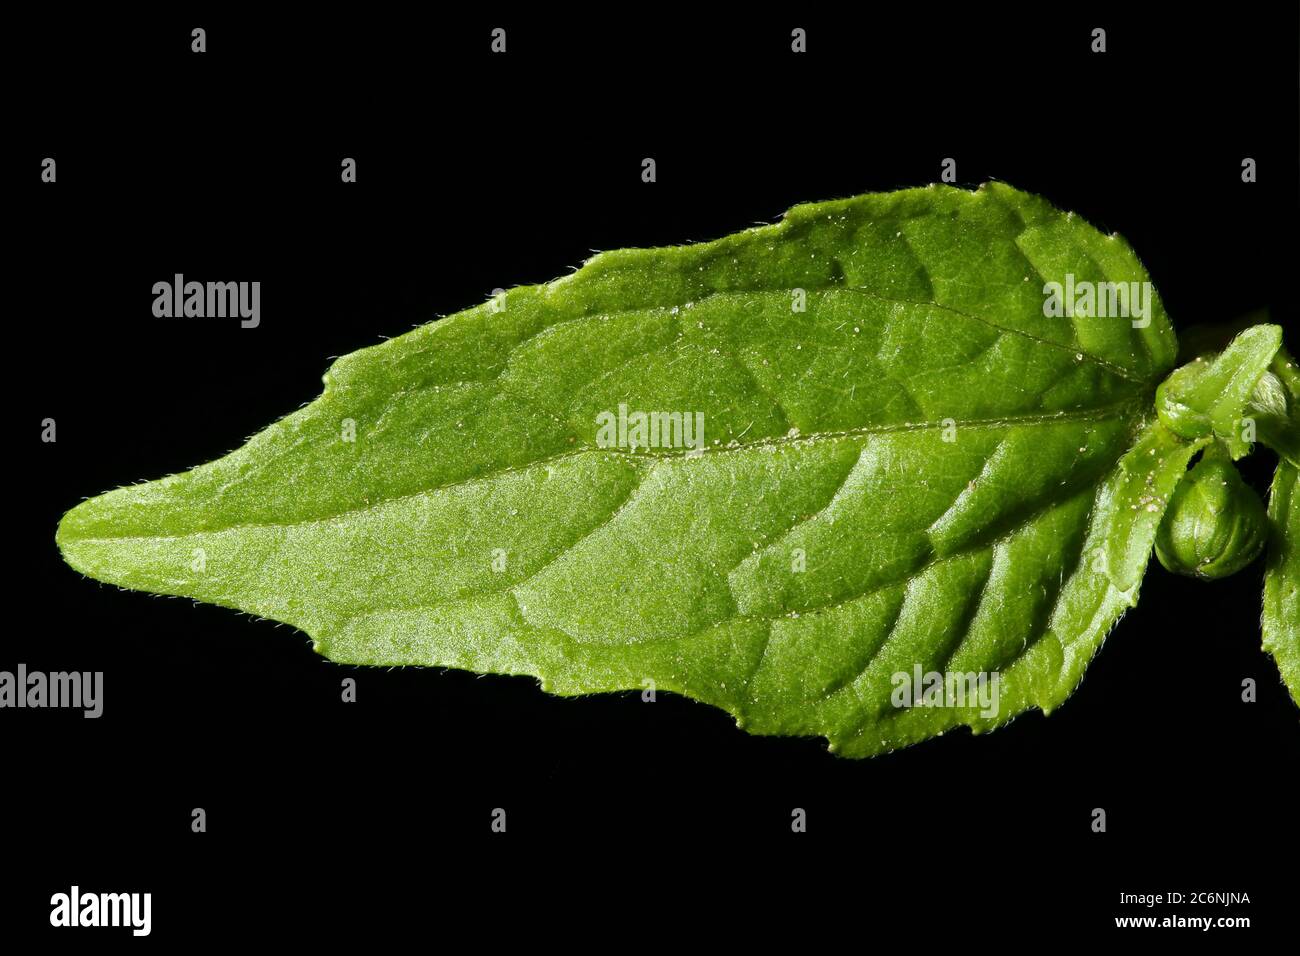 Gallante soldato (Galinsoga parviflora). Chiusura delle foglie Foto Stock